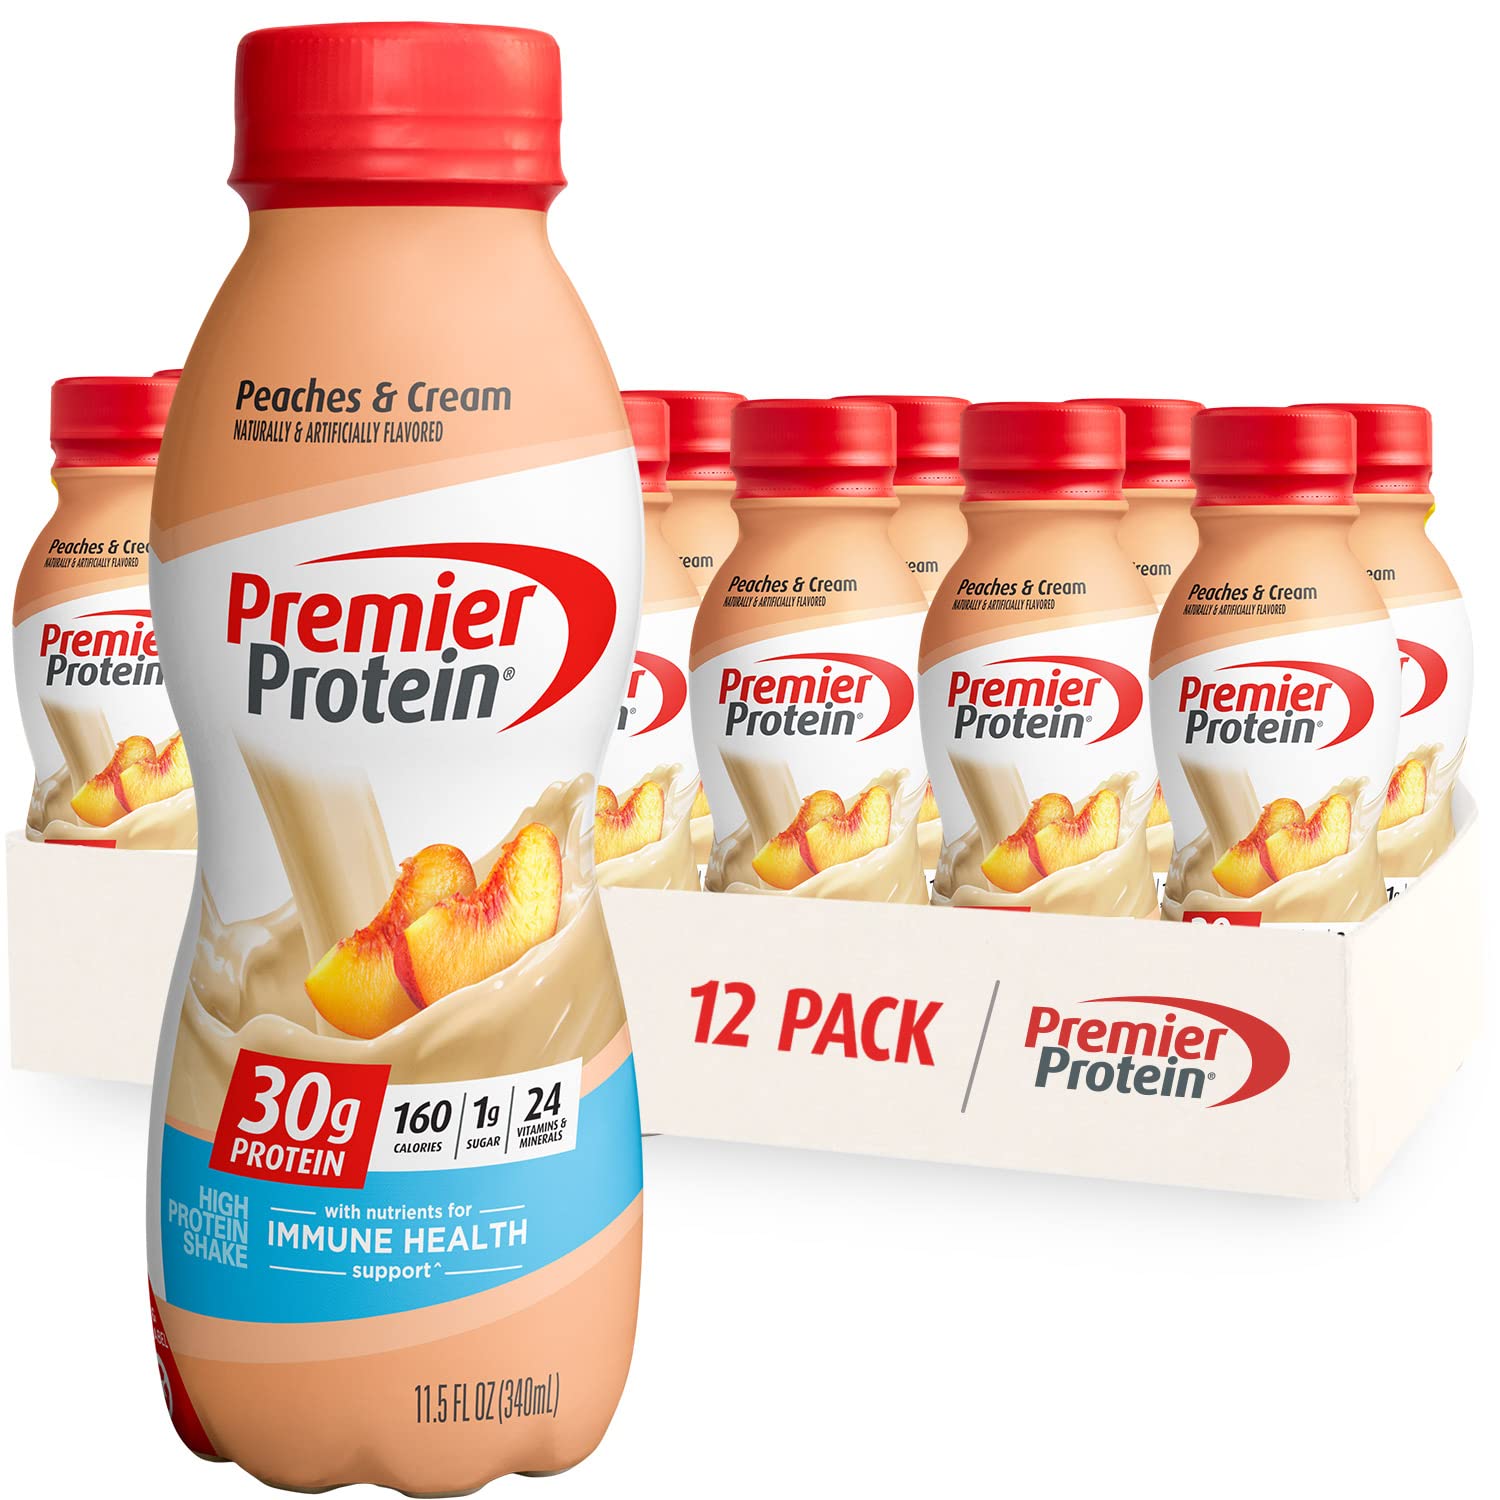 12-Pack 11.5-Oz Premier Protein Shake (Peaches & Cream) $13.50 w/ S&S + Free Shipping